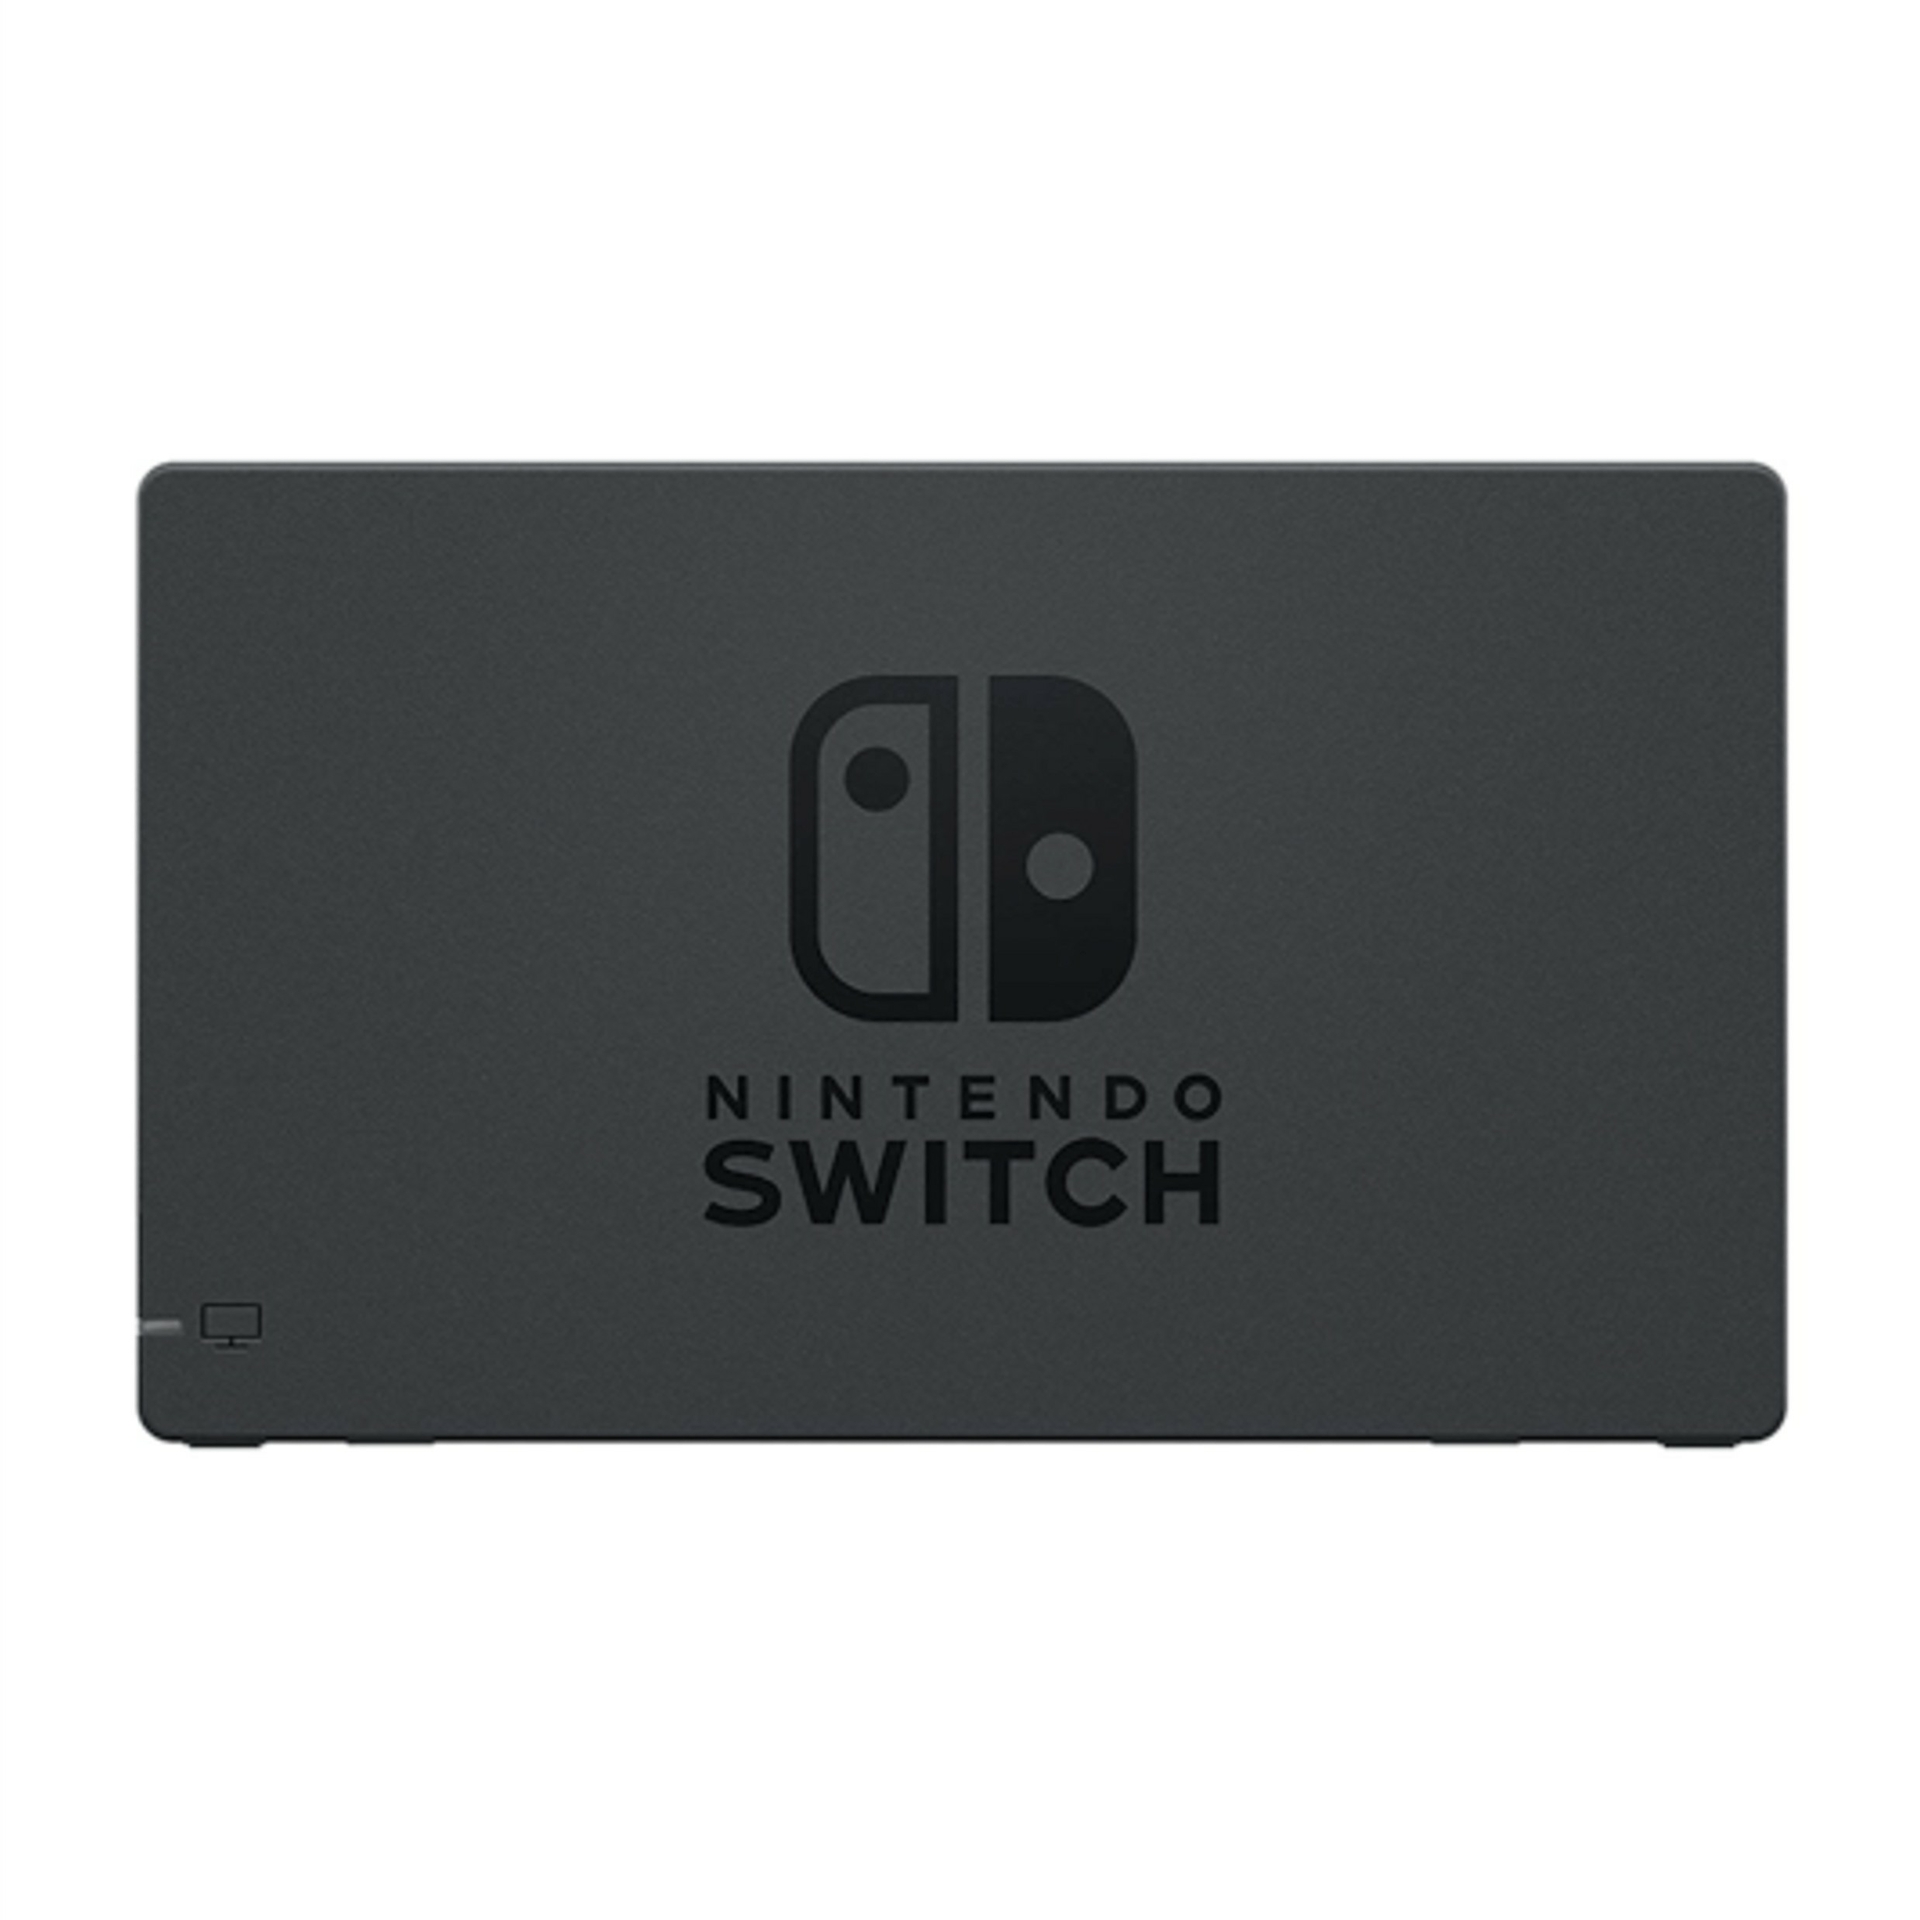 Nintendo Switch Dock (Los) Kopen | Nintendo Switch Hardware